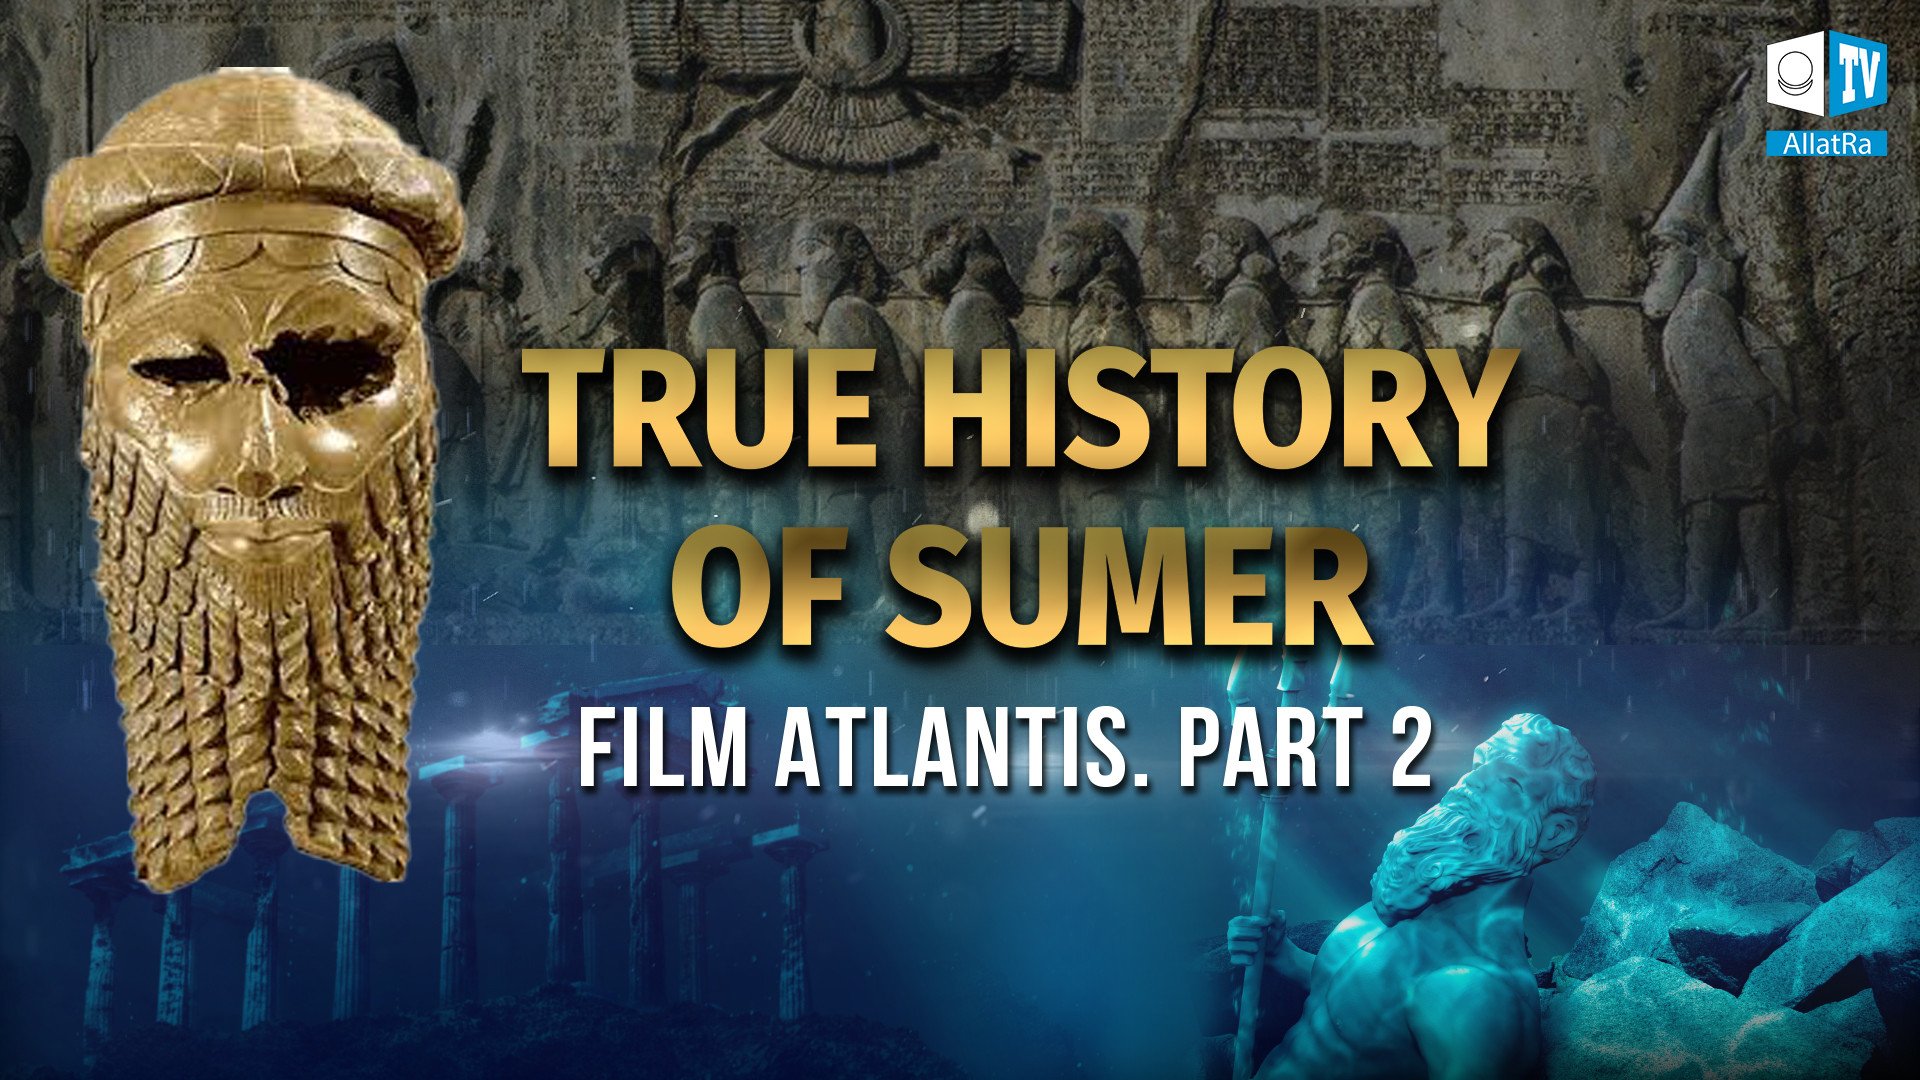 Ancient Sumer and Mesopotamia: Origins of modern society. Film Atlantis. Part 2